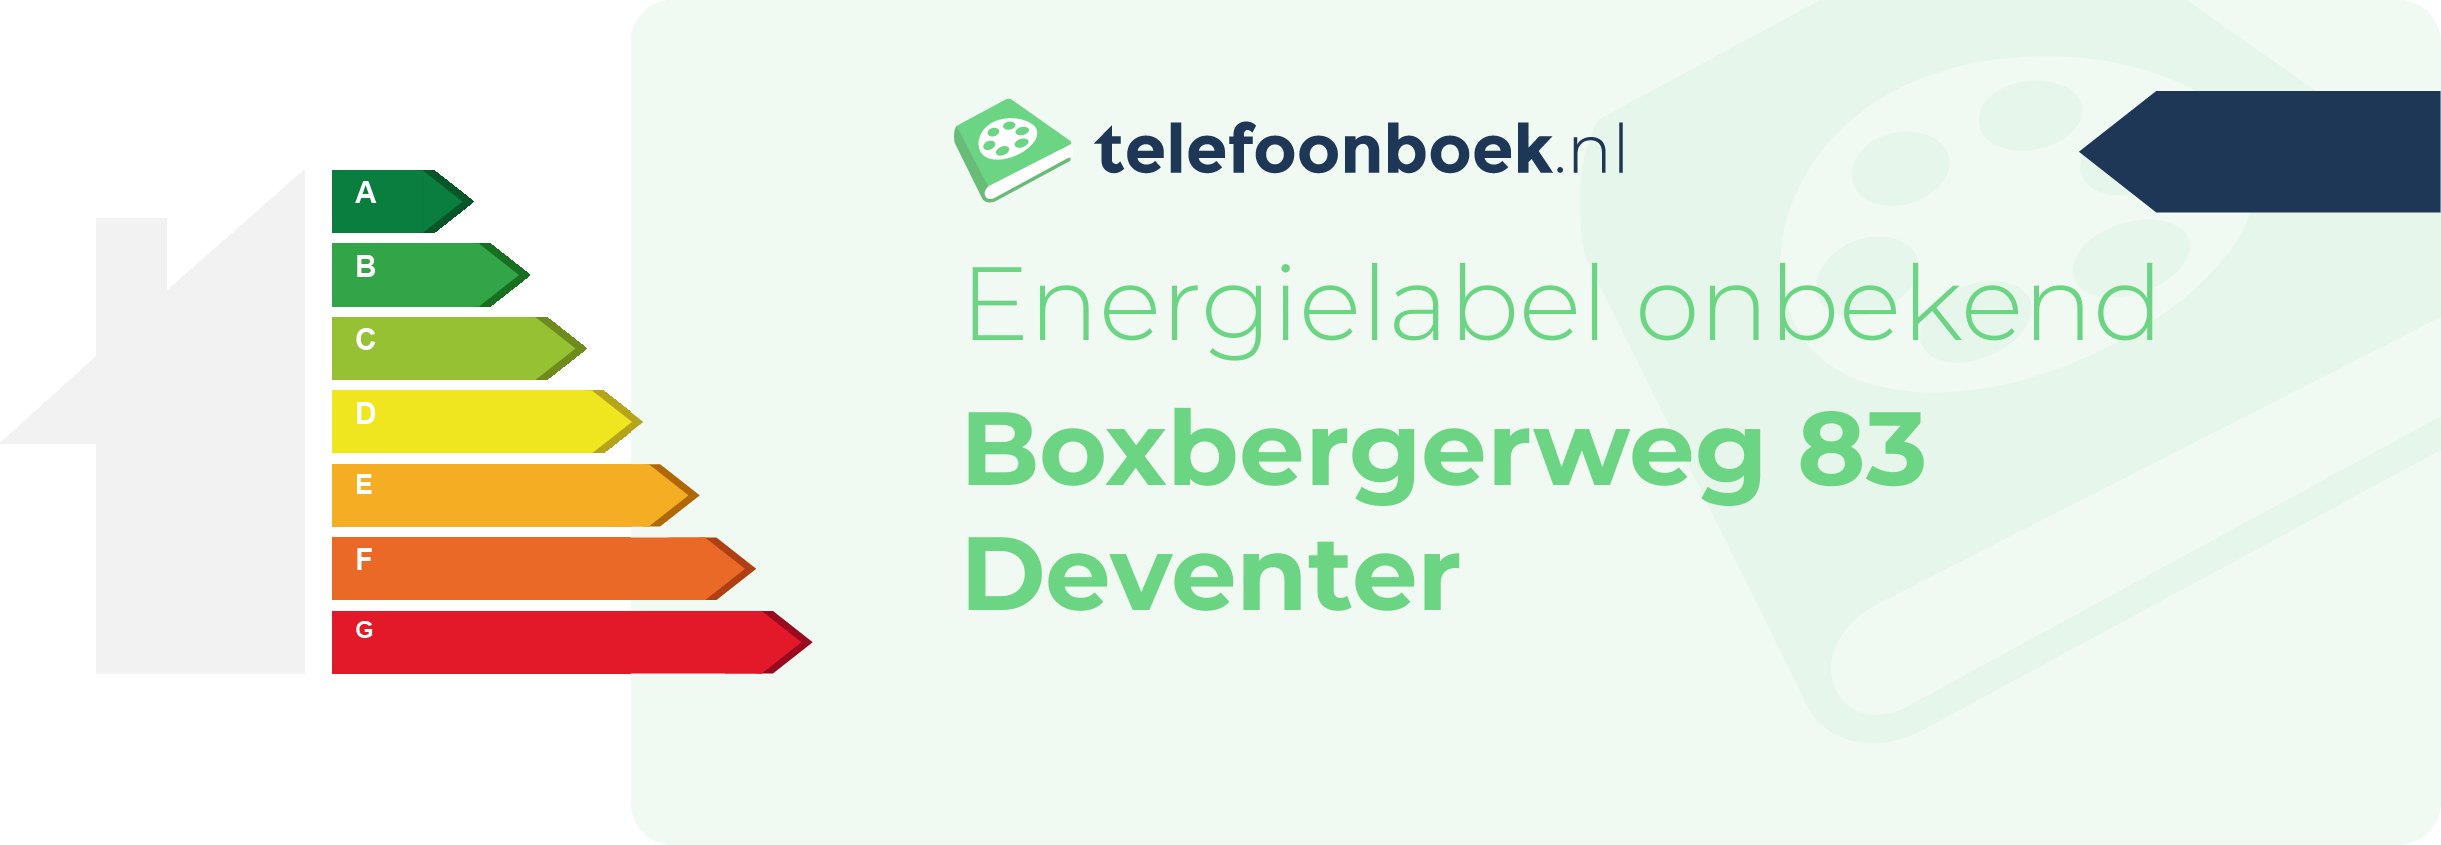 Energielabel Boxbergerweg 83 Deventer